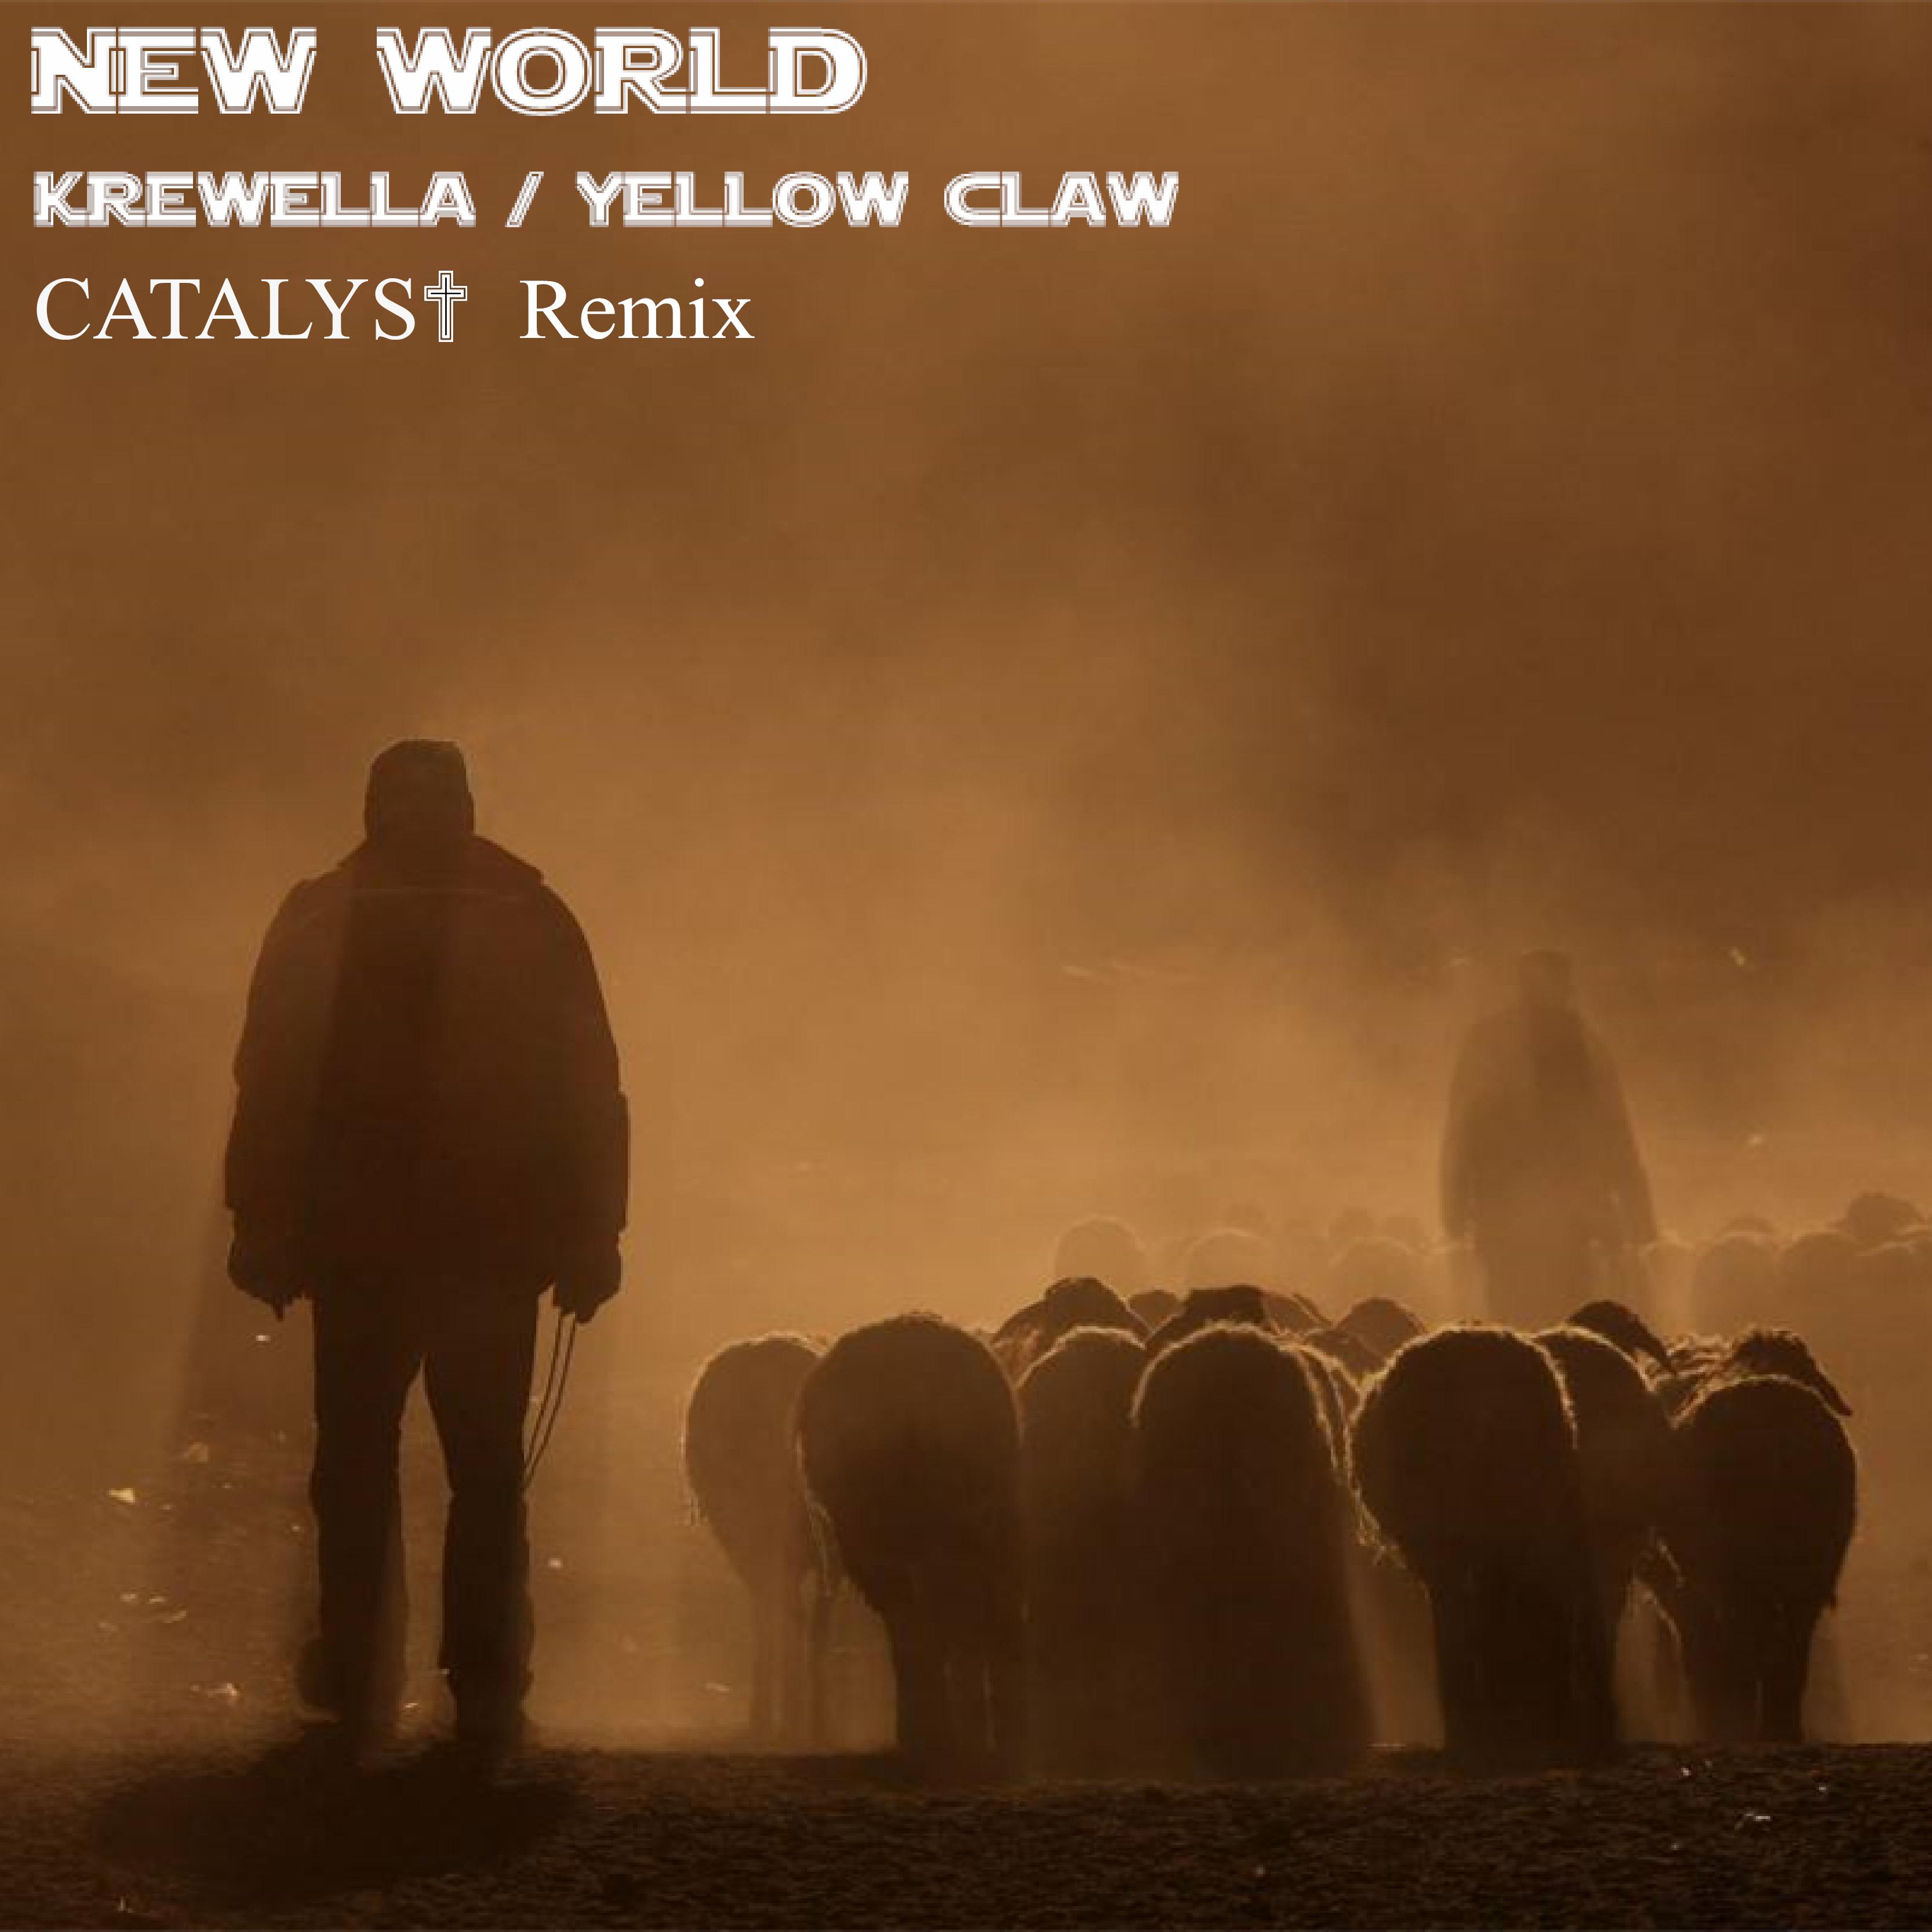 New  World  CATALYST  Remix